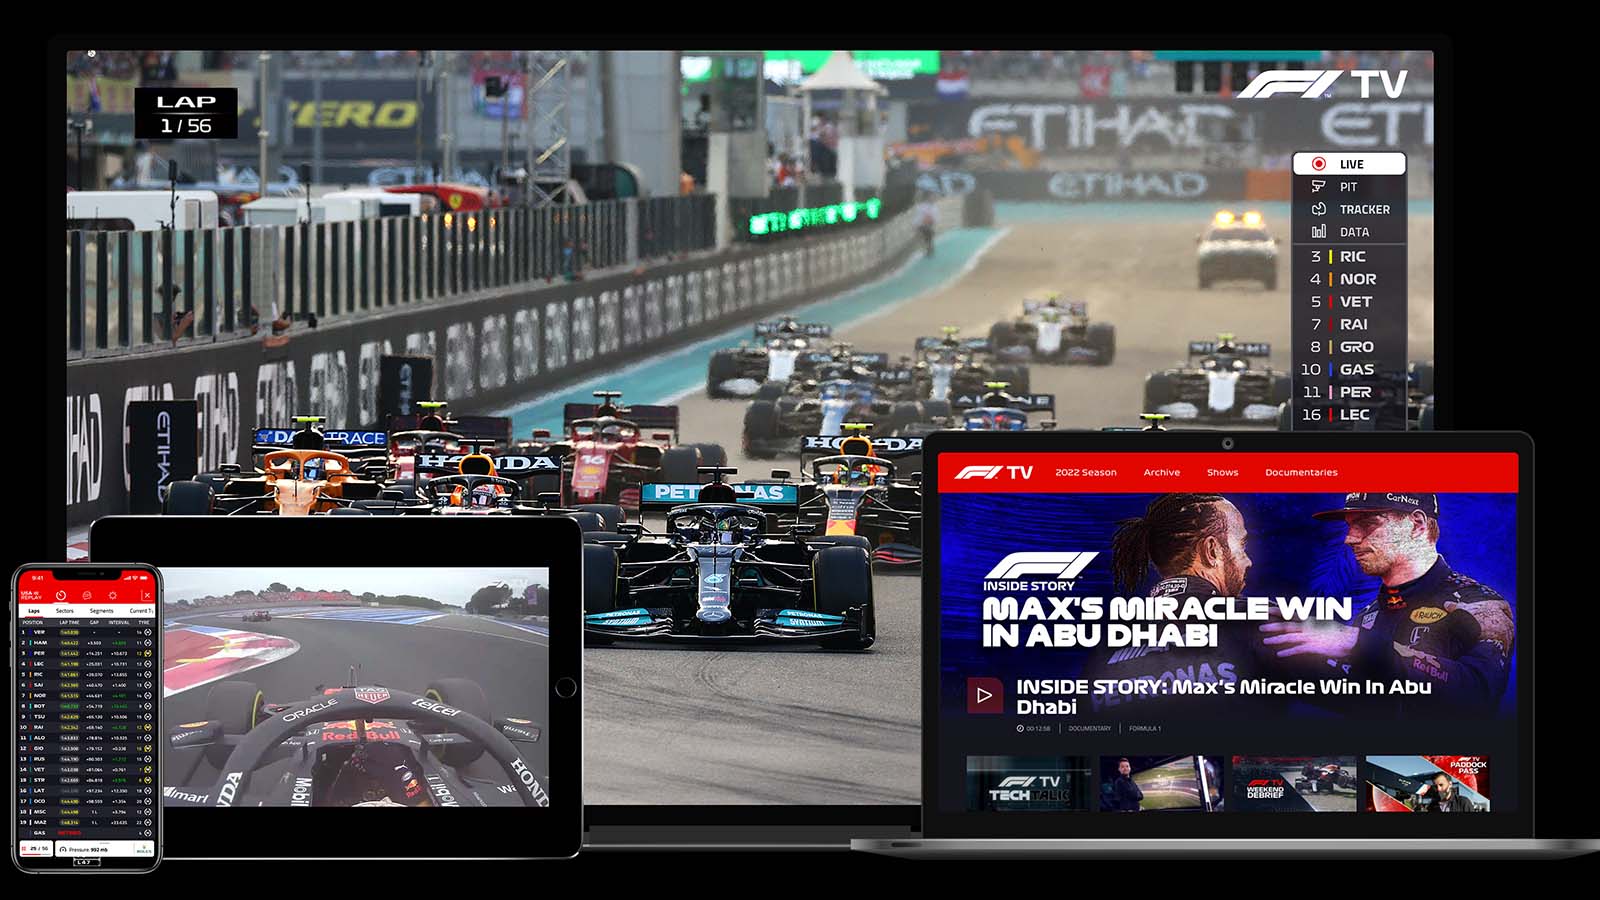 Promo screens for F1 TV